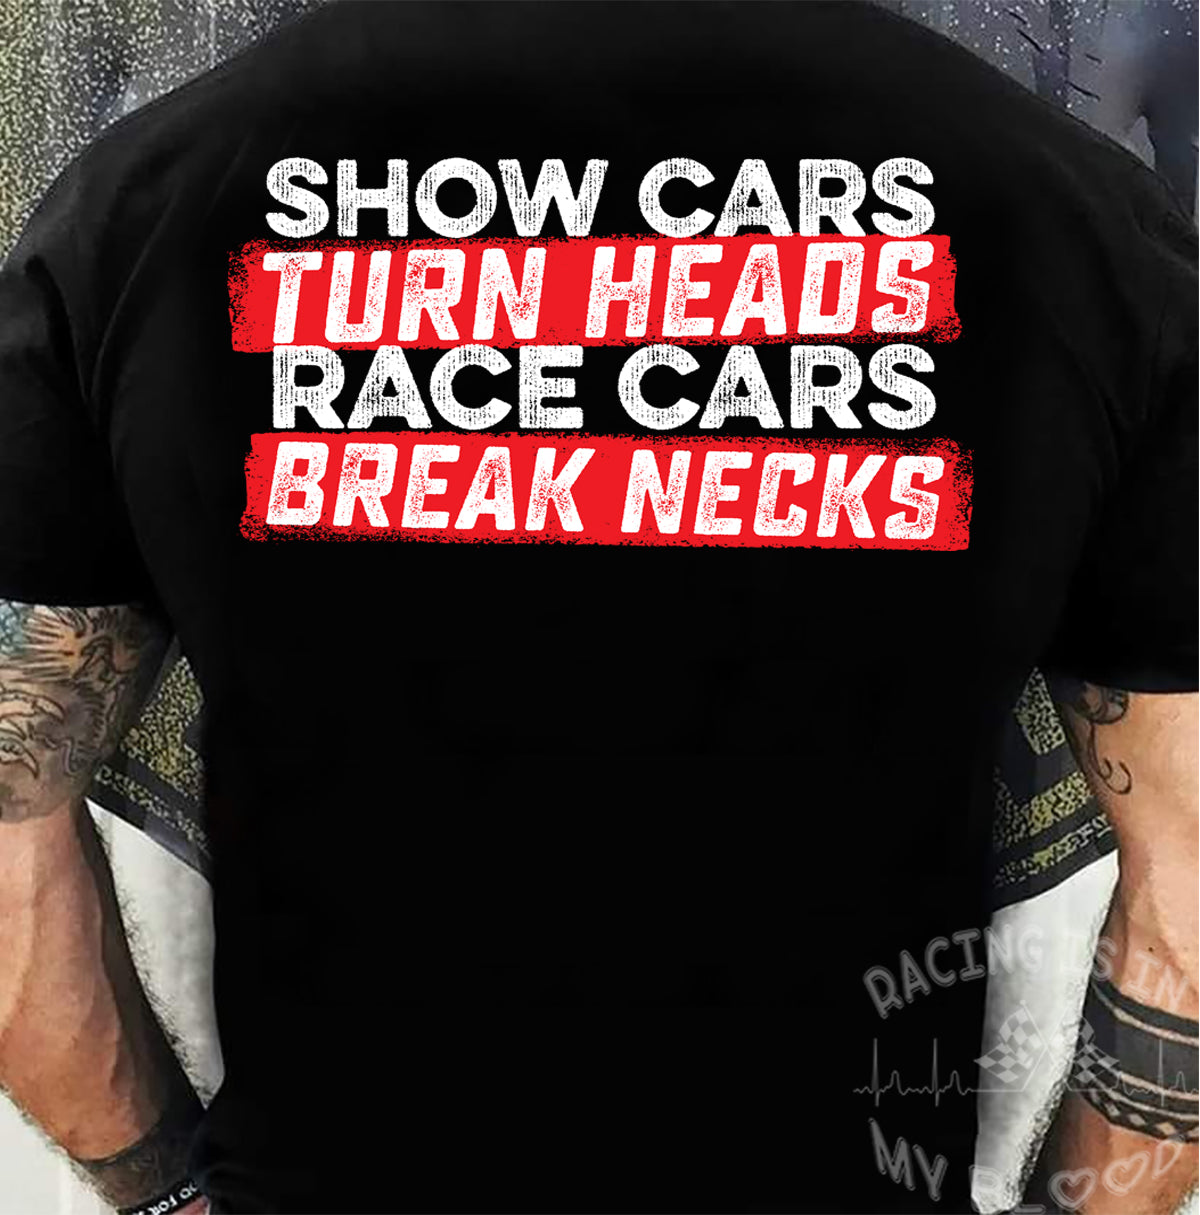 Show Cars Turn Heads Race Cars Break Necks T-Shirts!